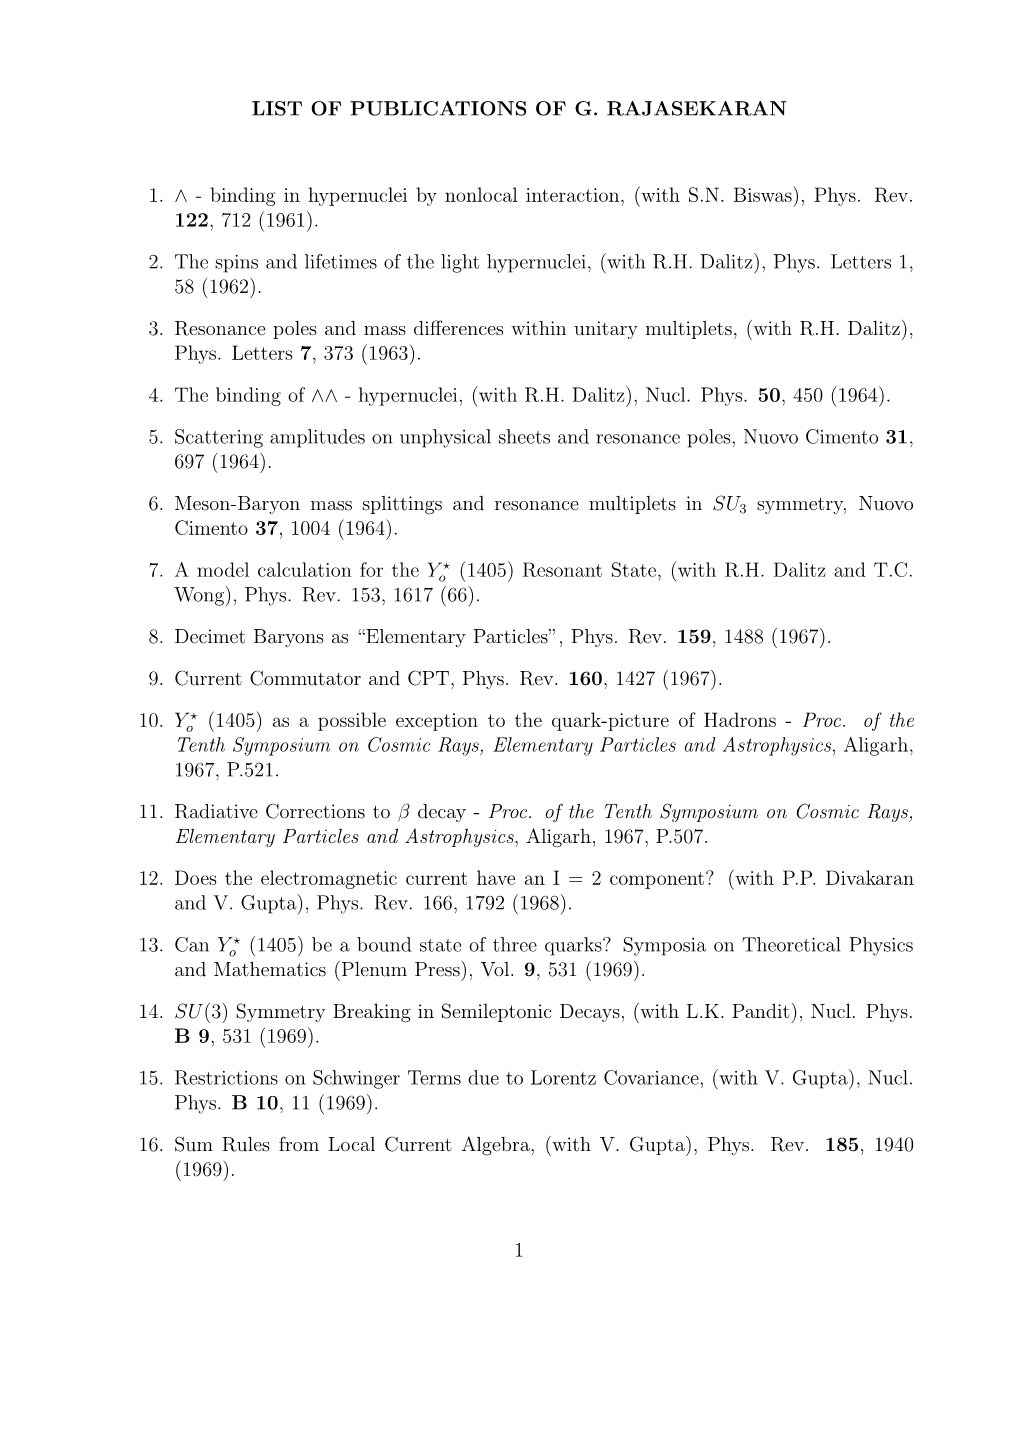 Phys. Rev. 122, 712 (1961)